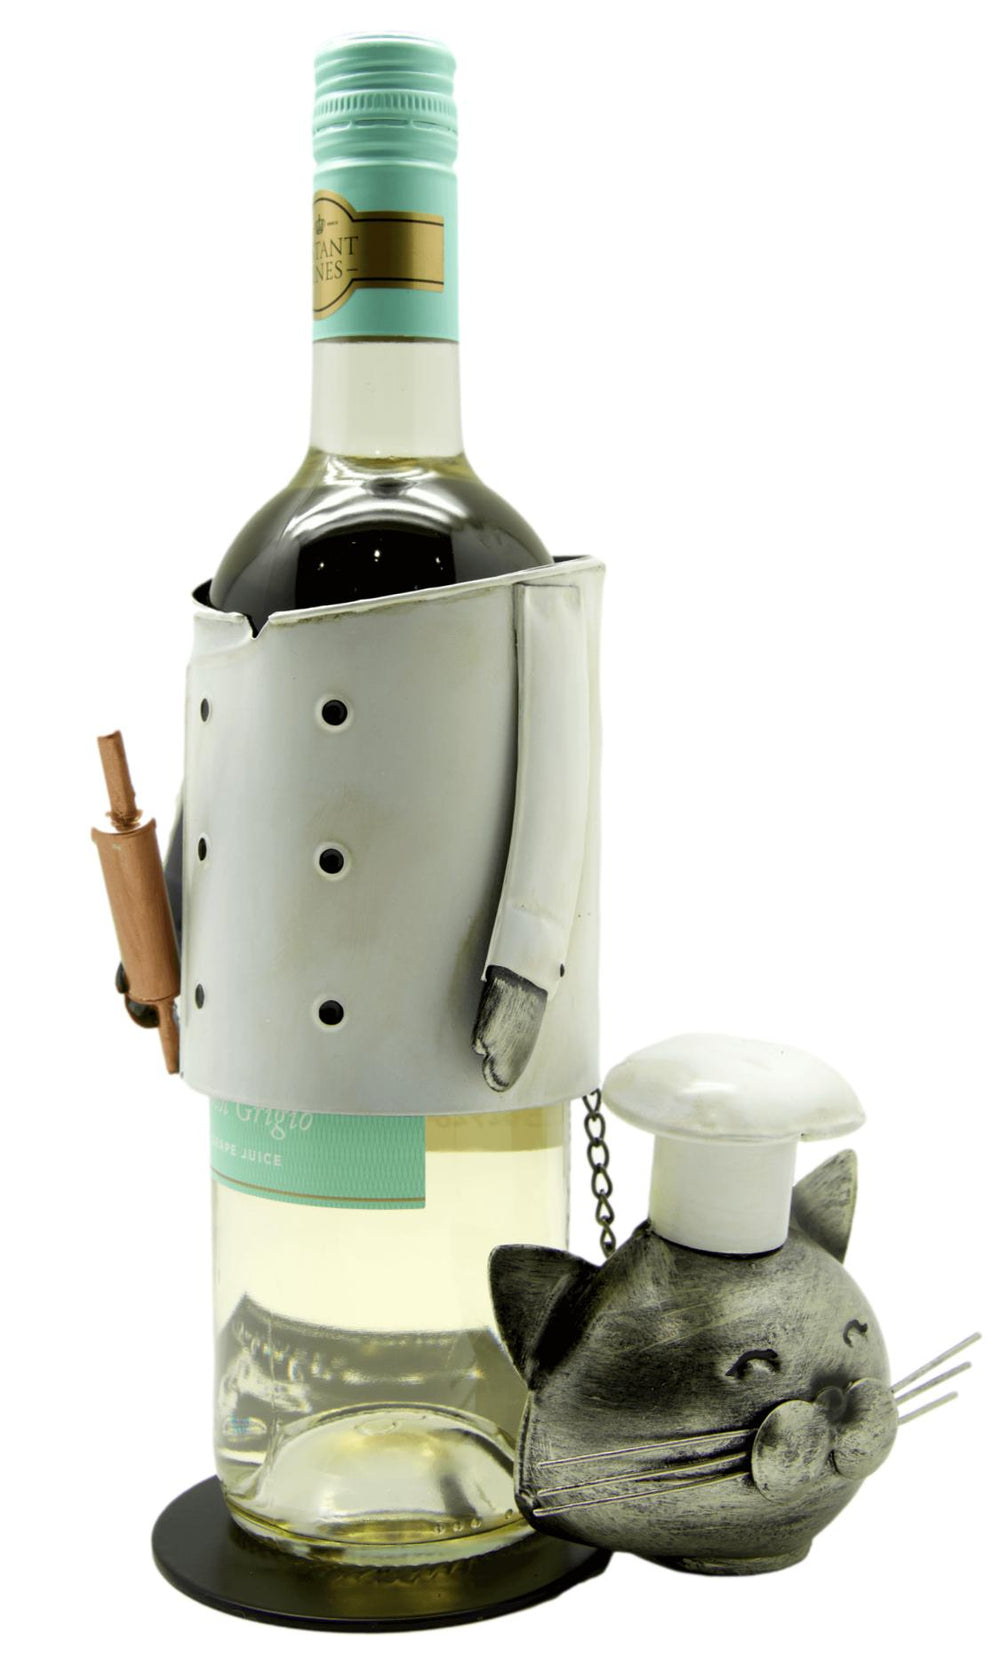 Chef Metal Cat Wine Bottle Holder